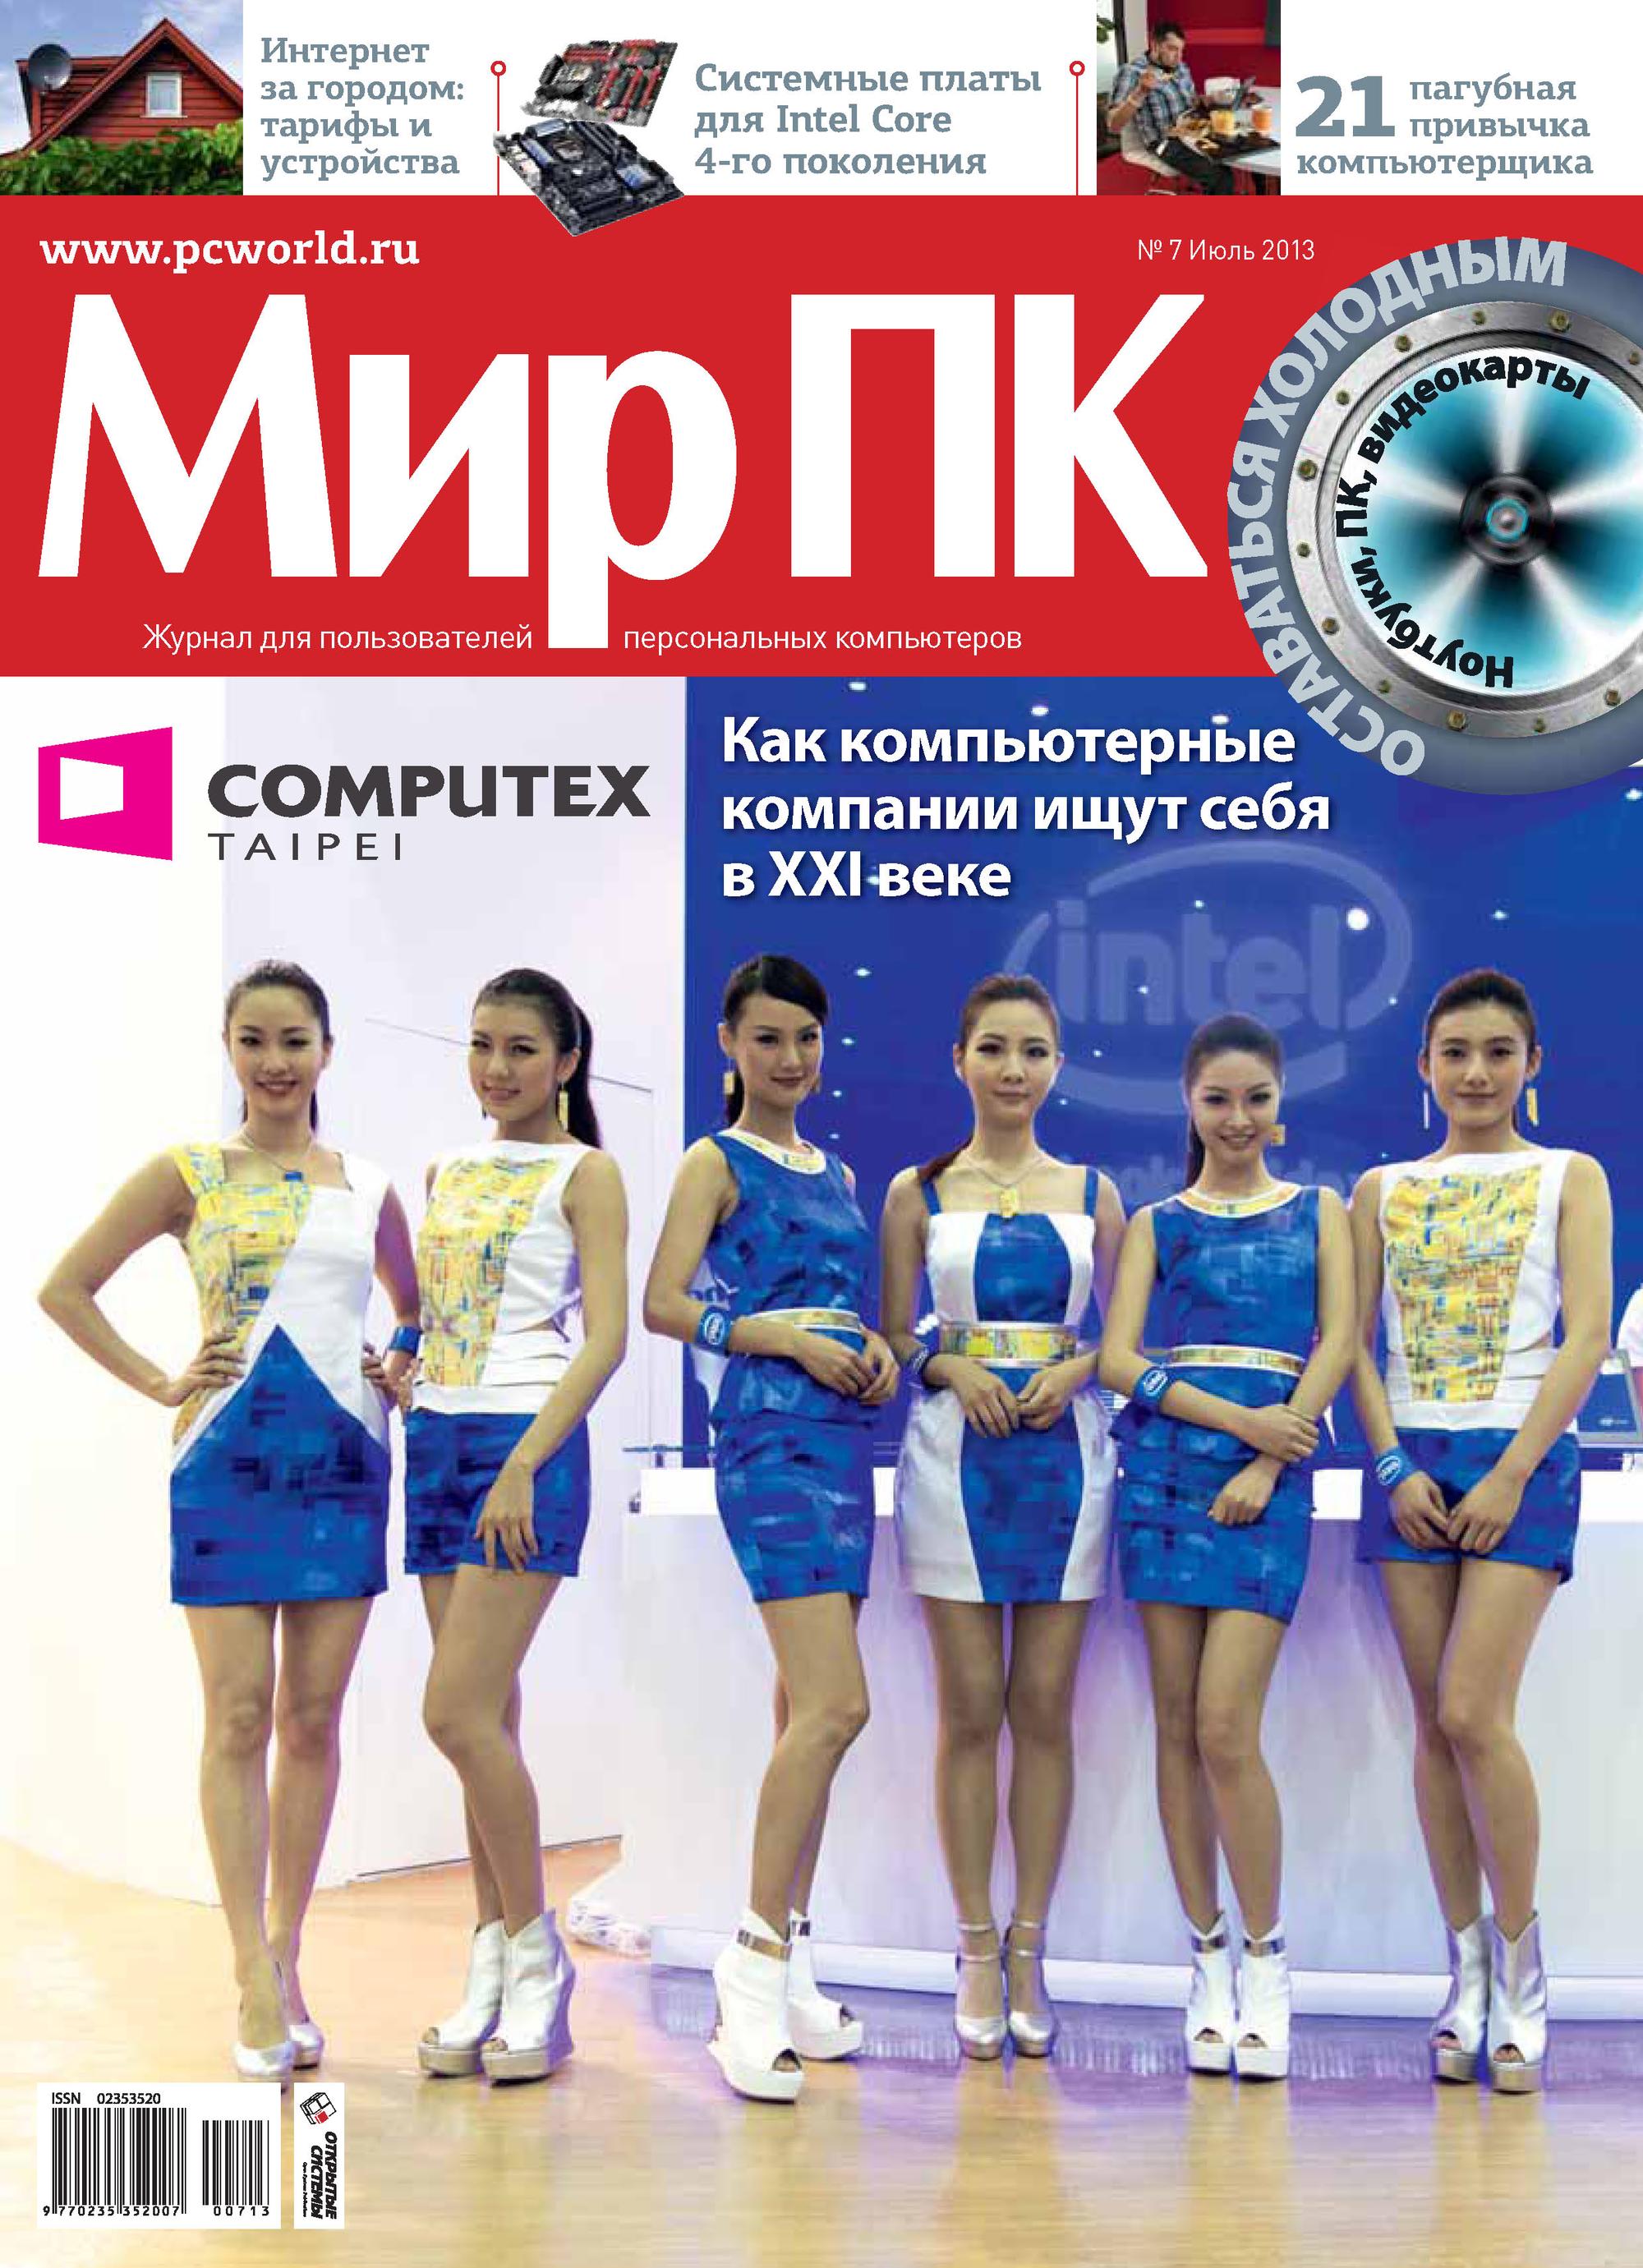 Журнал «Мир ПК» №07/2013